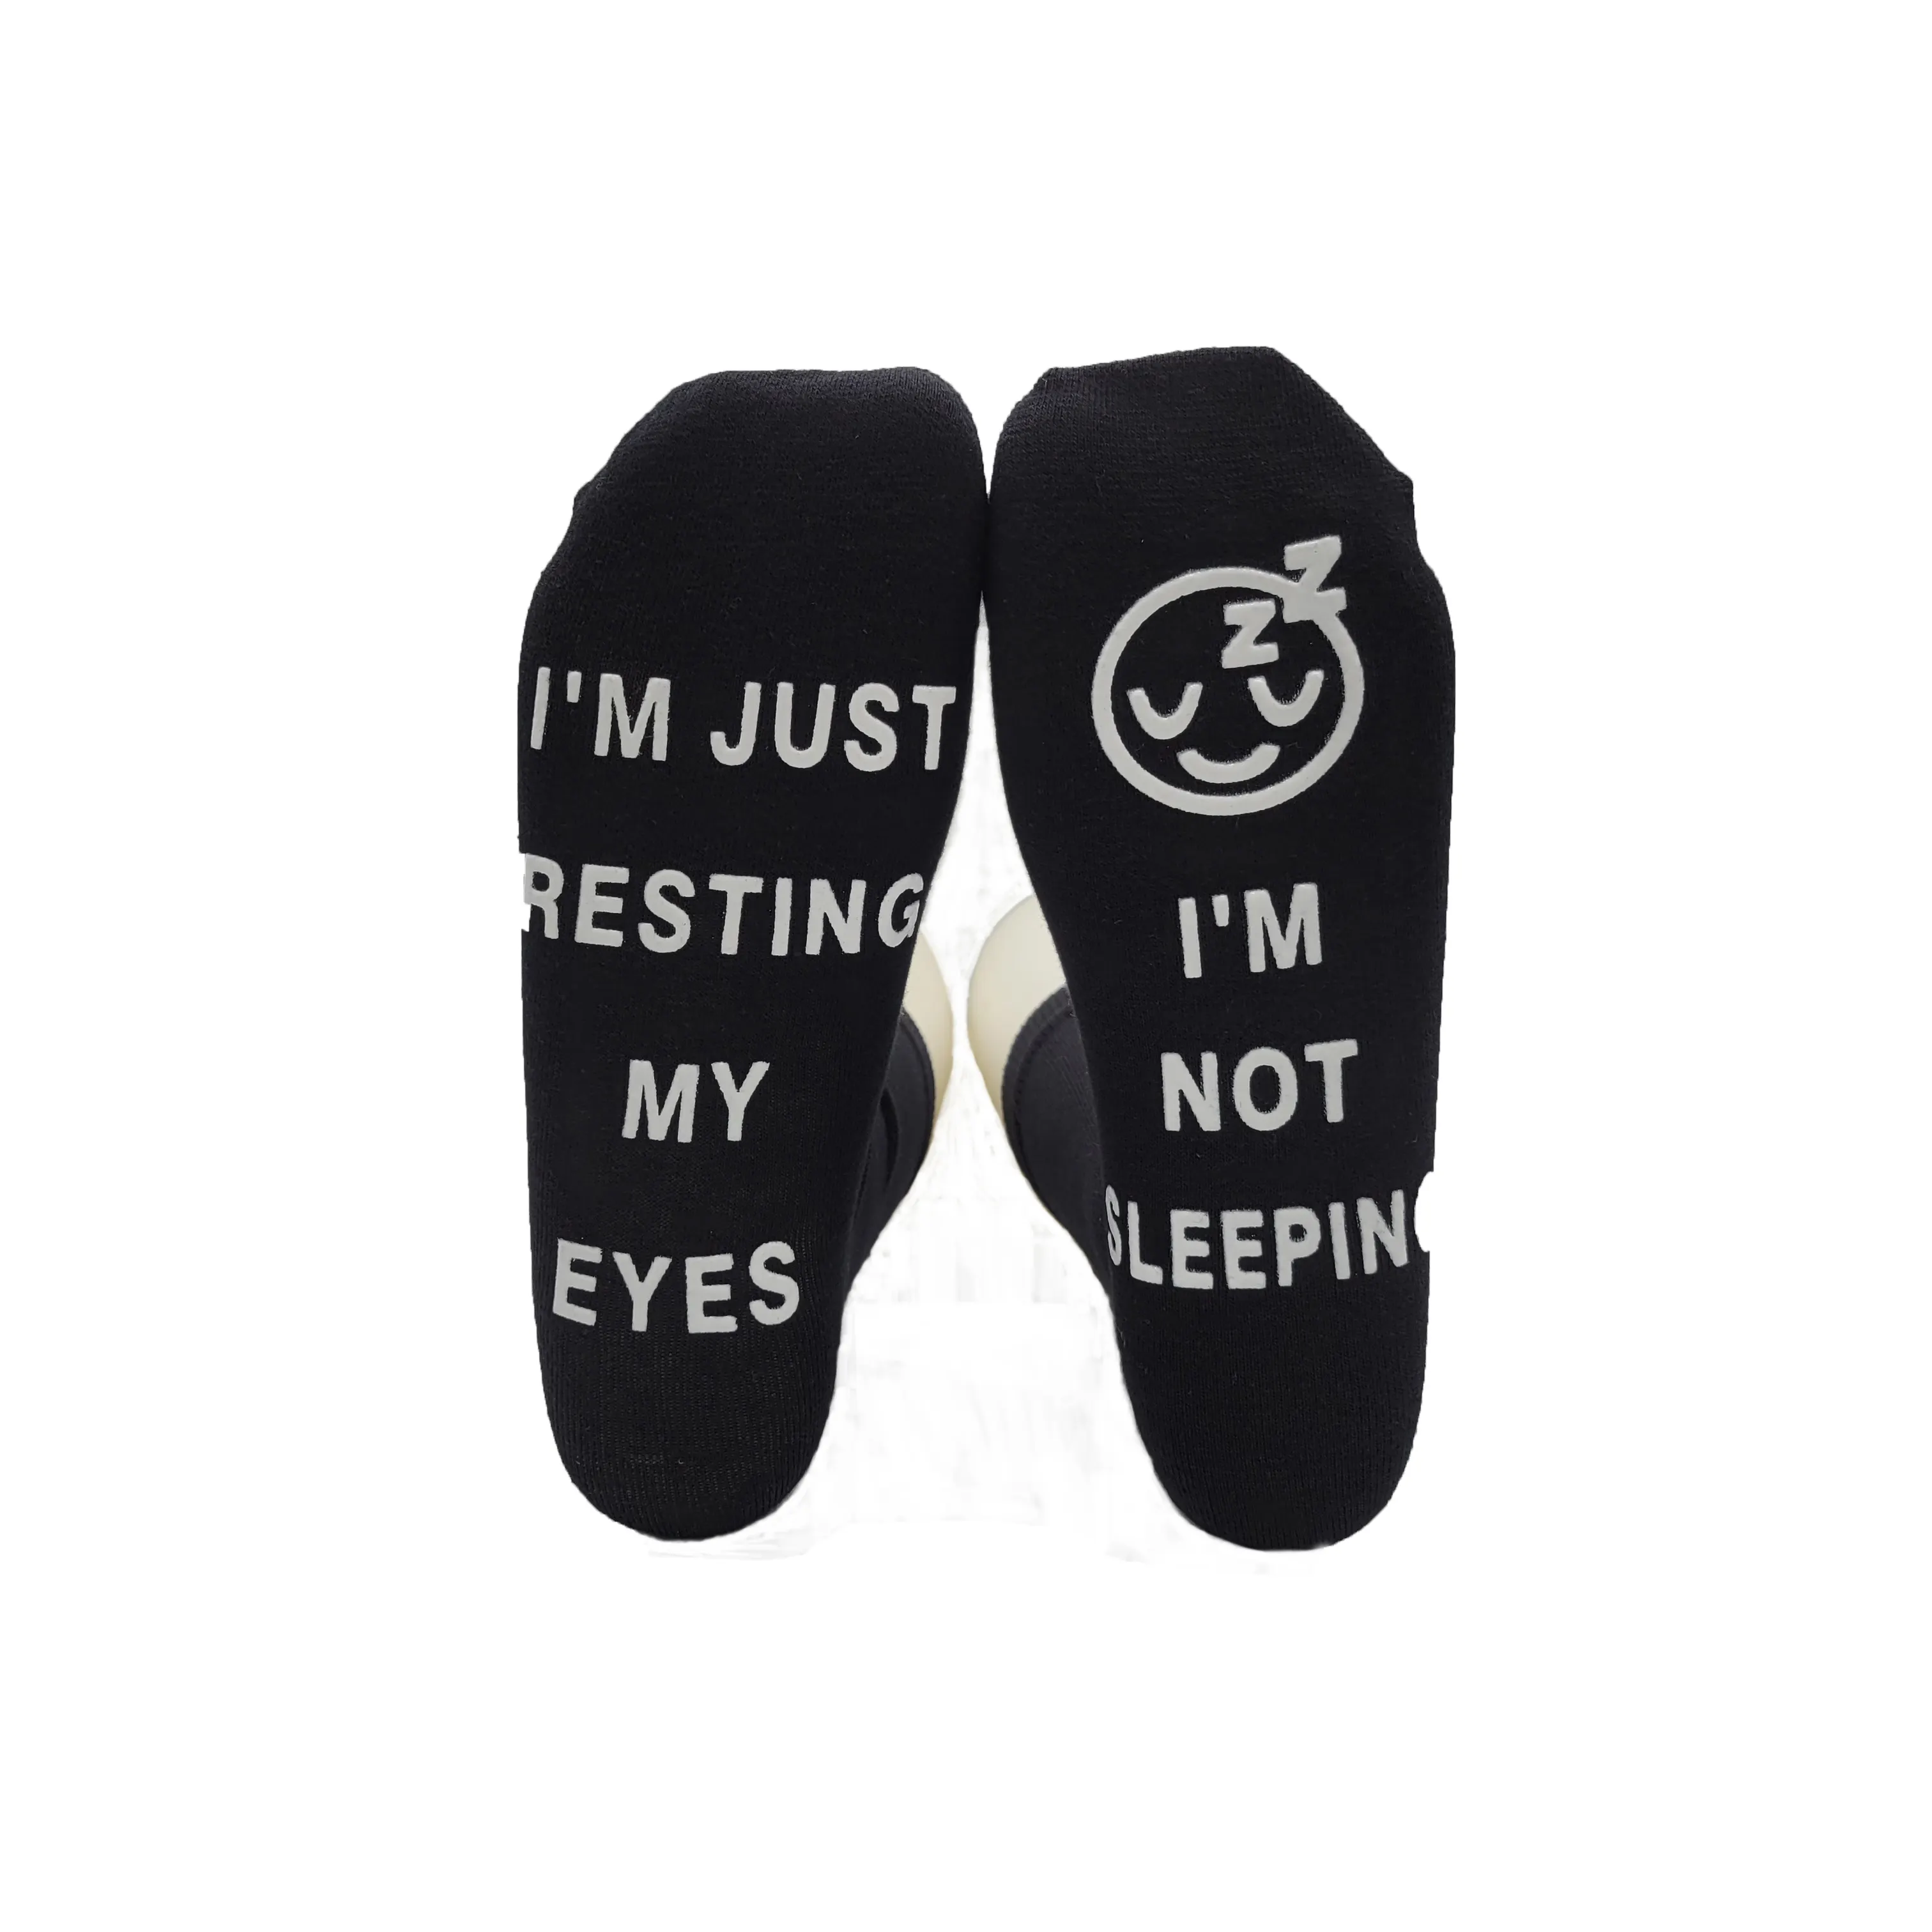 i'm just resting my eyes i'm not sleeping Rest luminous letter socks comfort health care neutral funny socks novel gifts